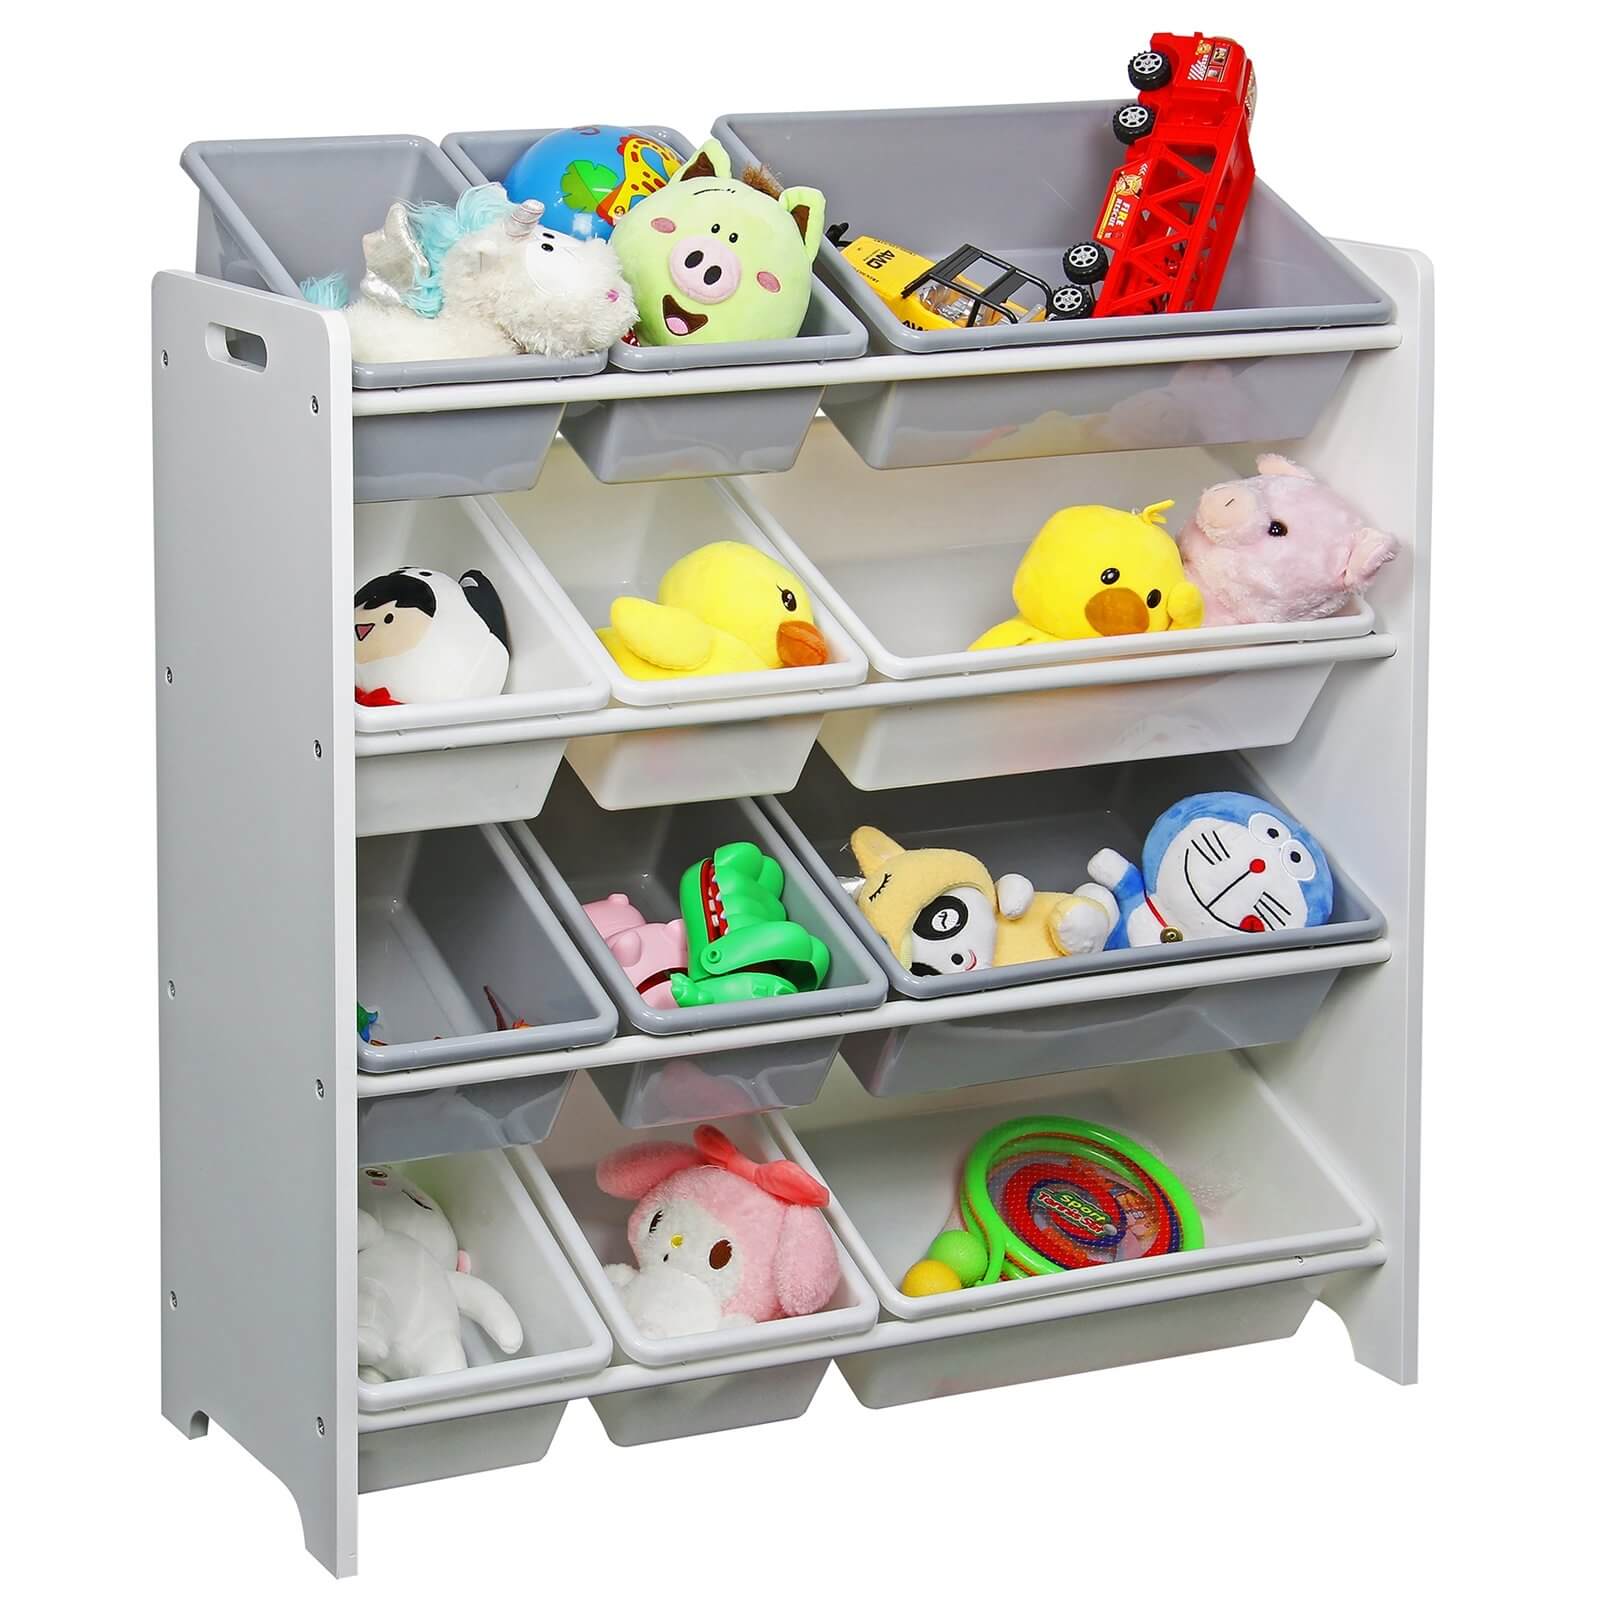 Toy Organiser with 12 Plastic Bins